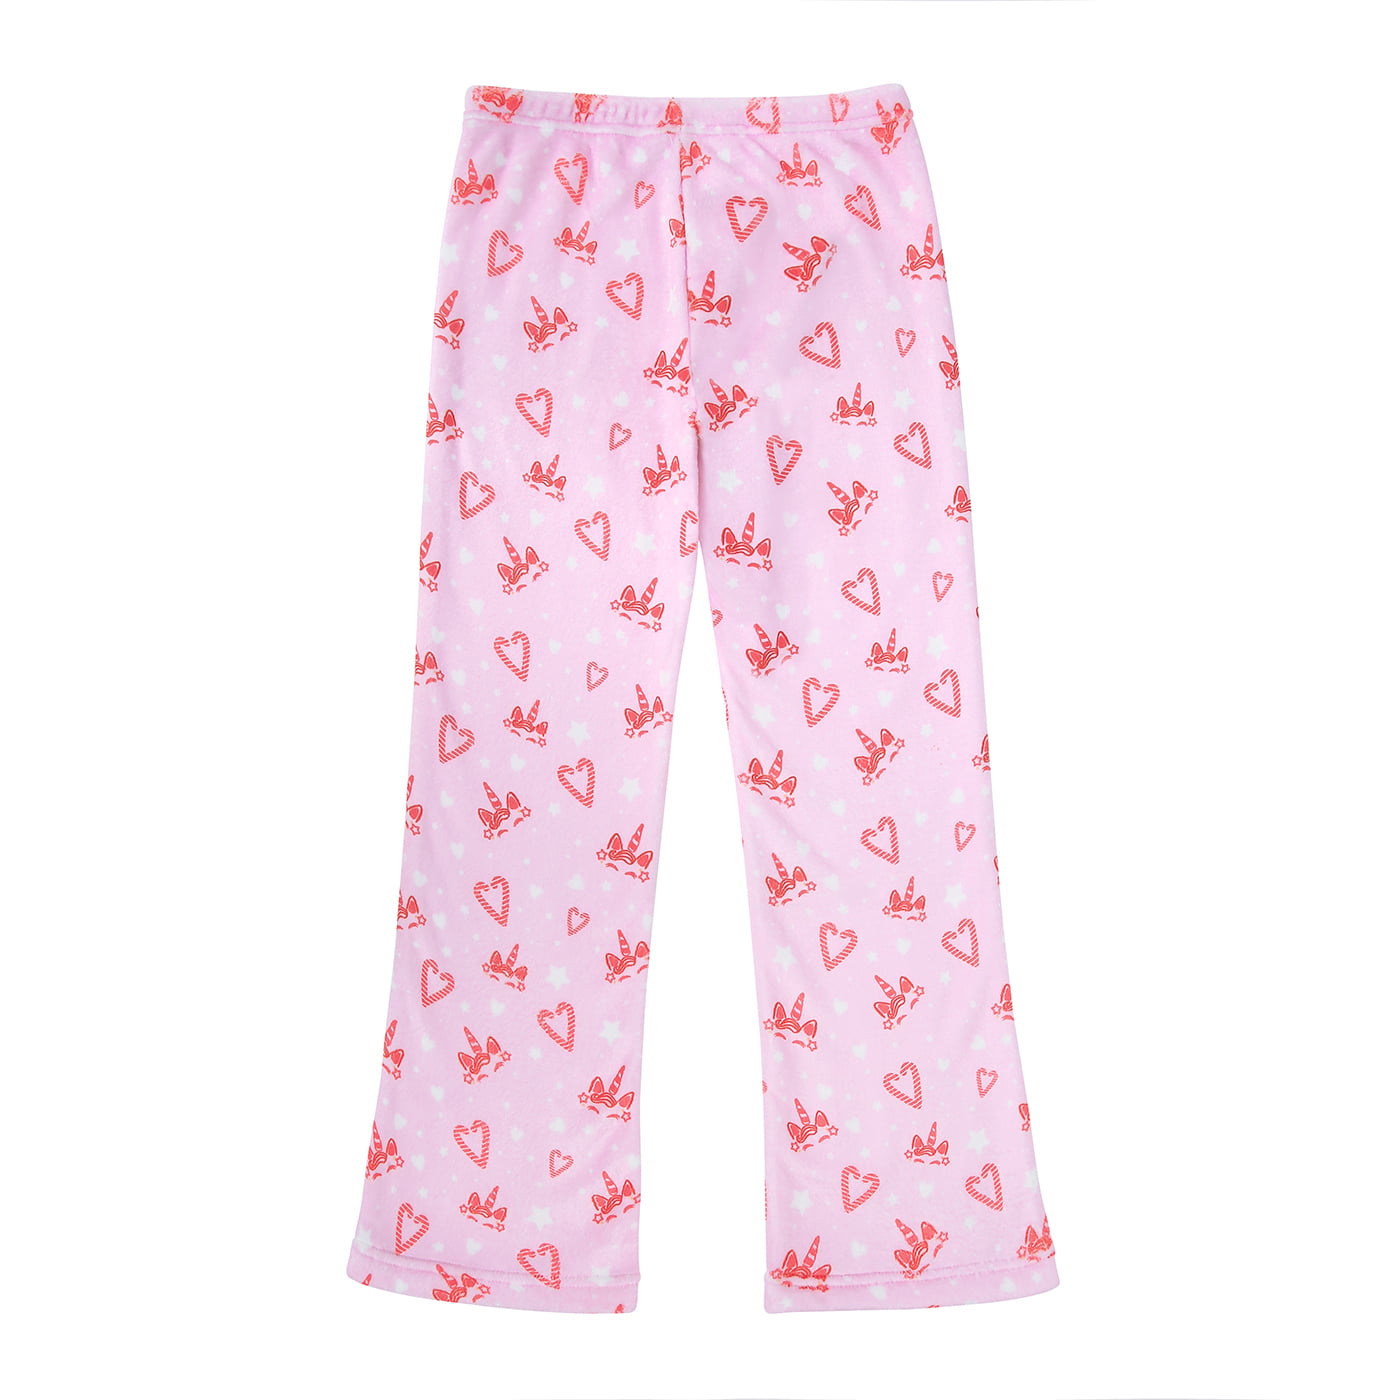 Candy Pink Girls Plush Premium Fuzzy Fleece Pants 